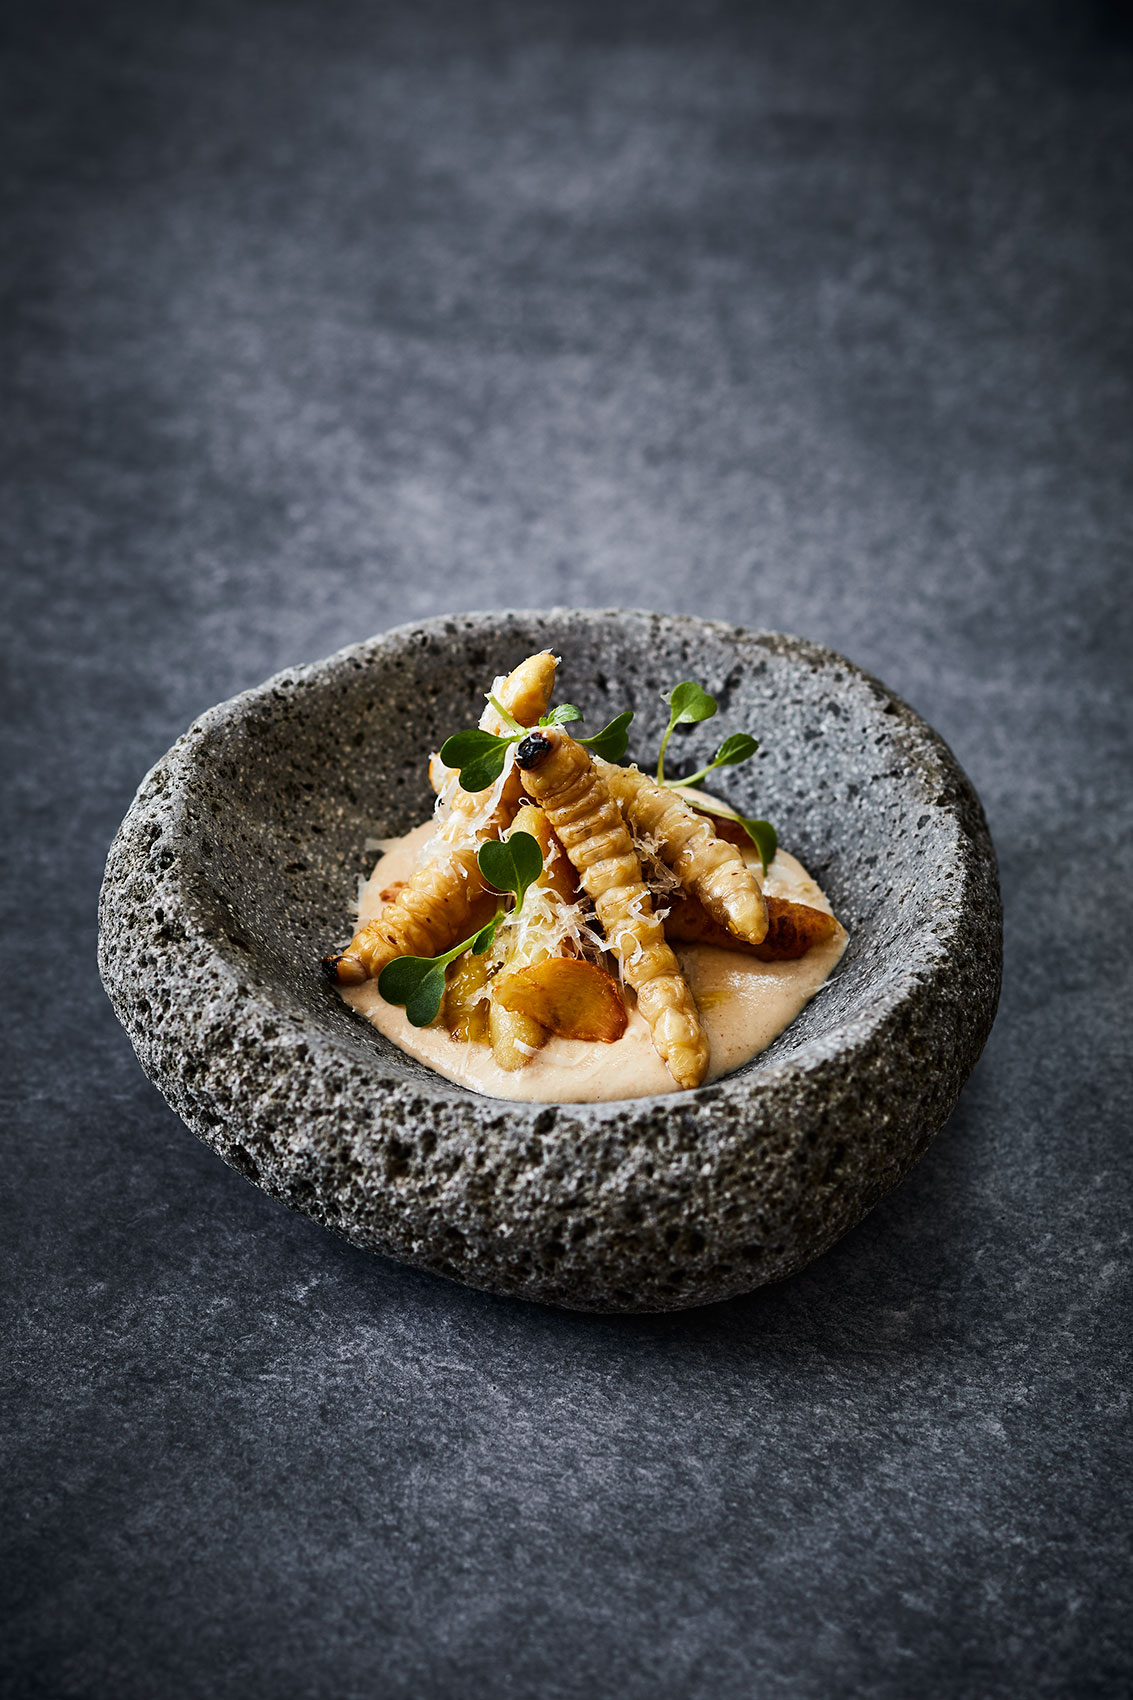 Hiakai • Savoury Gnocchi with Huhu Sauce in Rock Bowl • Lifestyle & Hospitality Food Photography